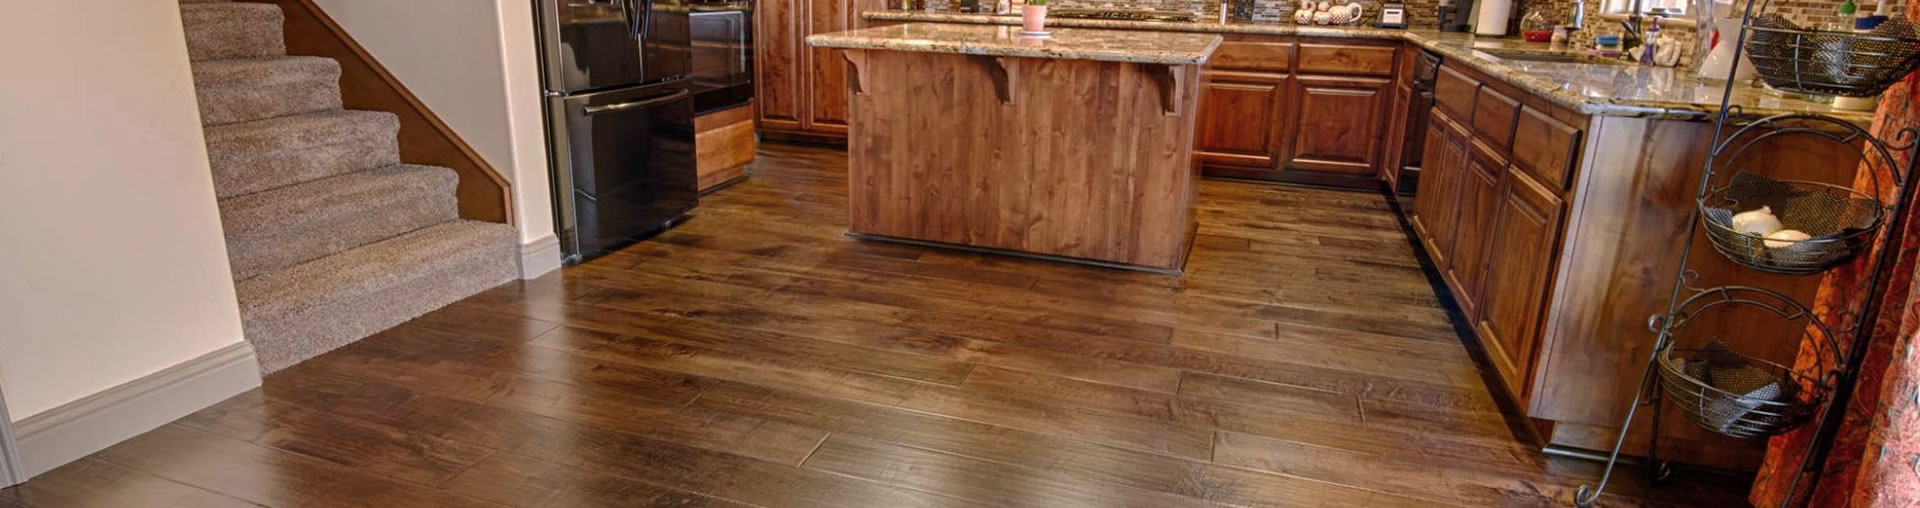 durable hardwood flooring most durable laminate flooring most durable laminate KRDPNJB